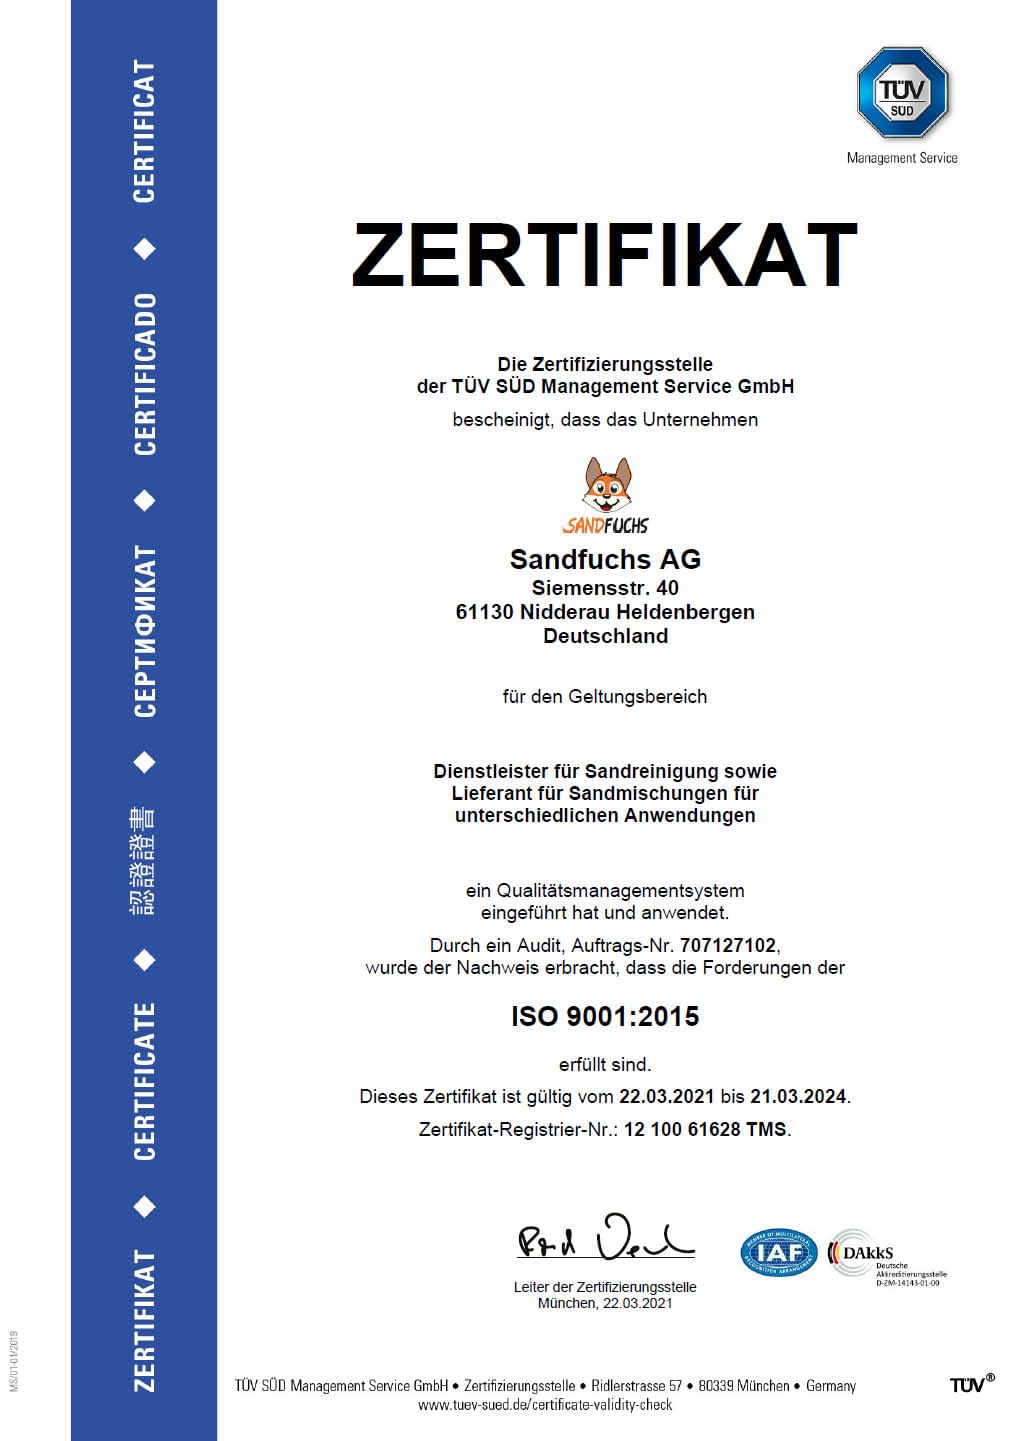 QMS ISO Norm 9001-2015 Zertifikat für Sandfuchs AG